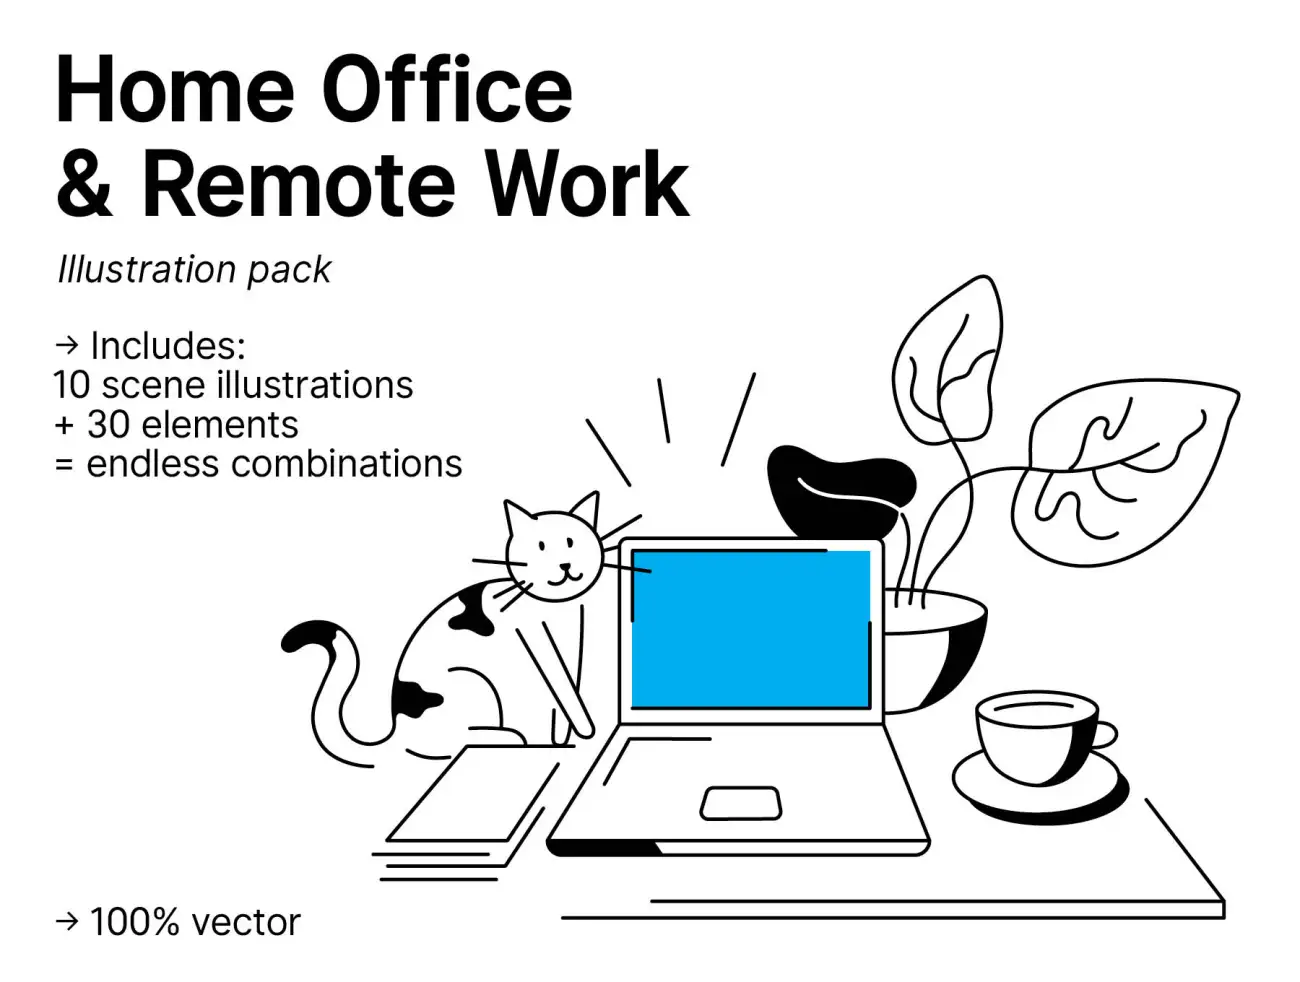 10个疫情期间居家隔离远程家庭办公插图包 Home office and Remote work Illustrations Pack插图1